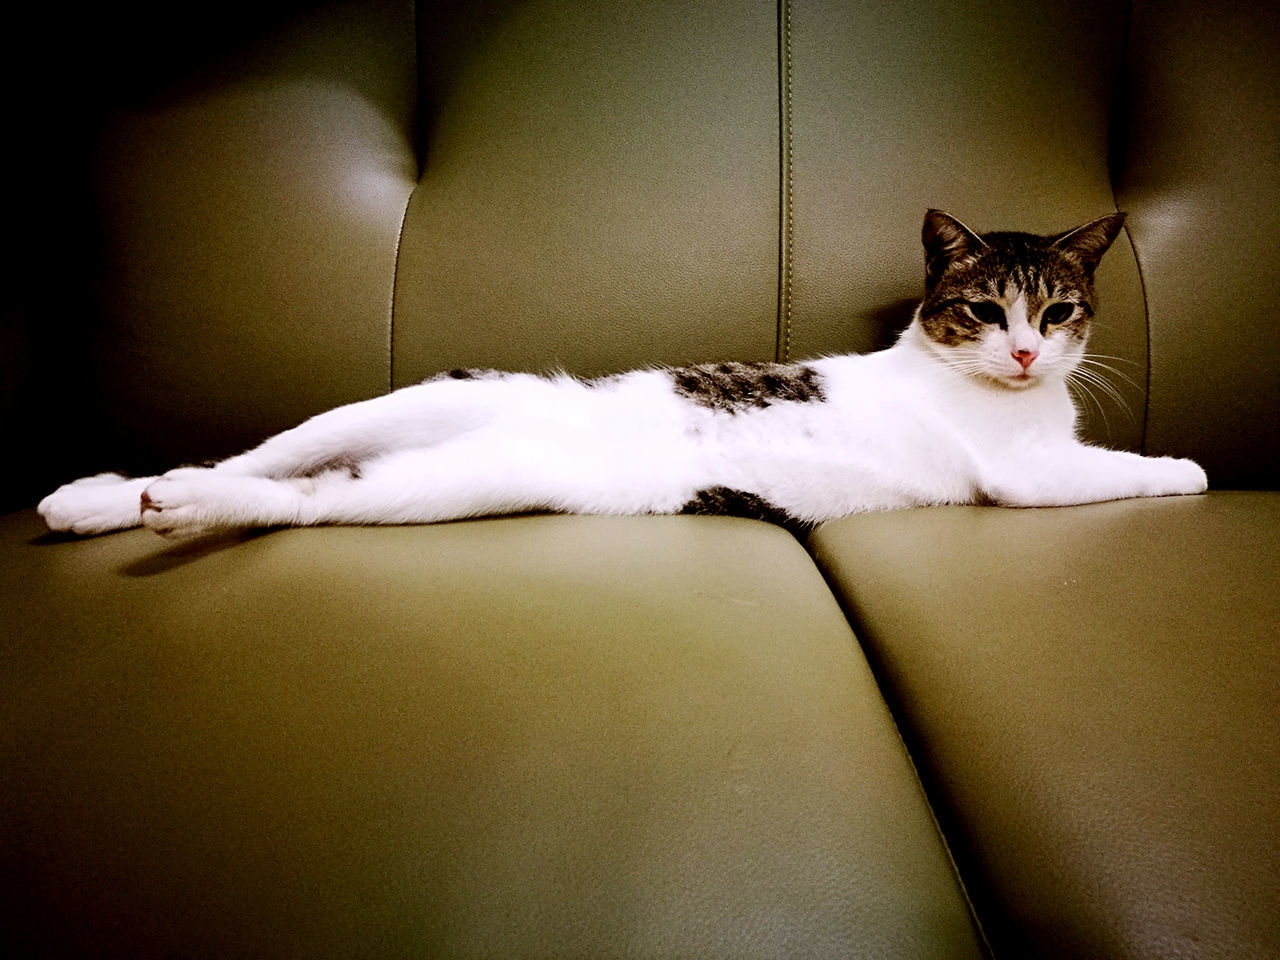 PORTRAIT OF CAT RELAXING ON CARPET